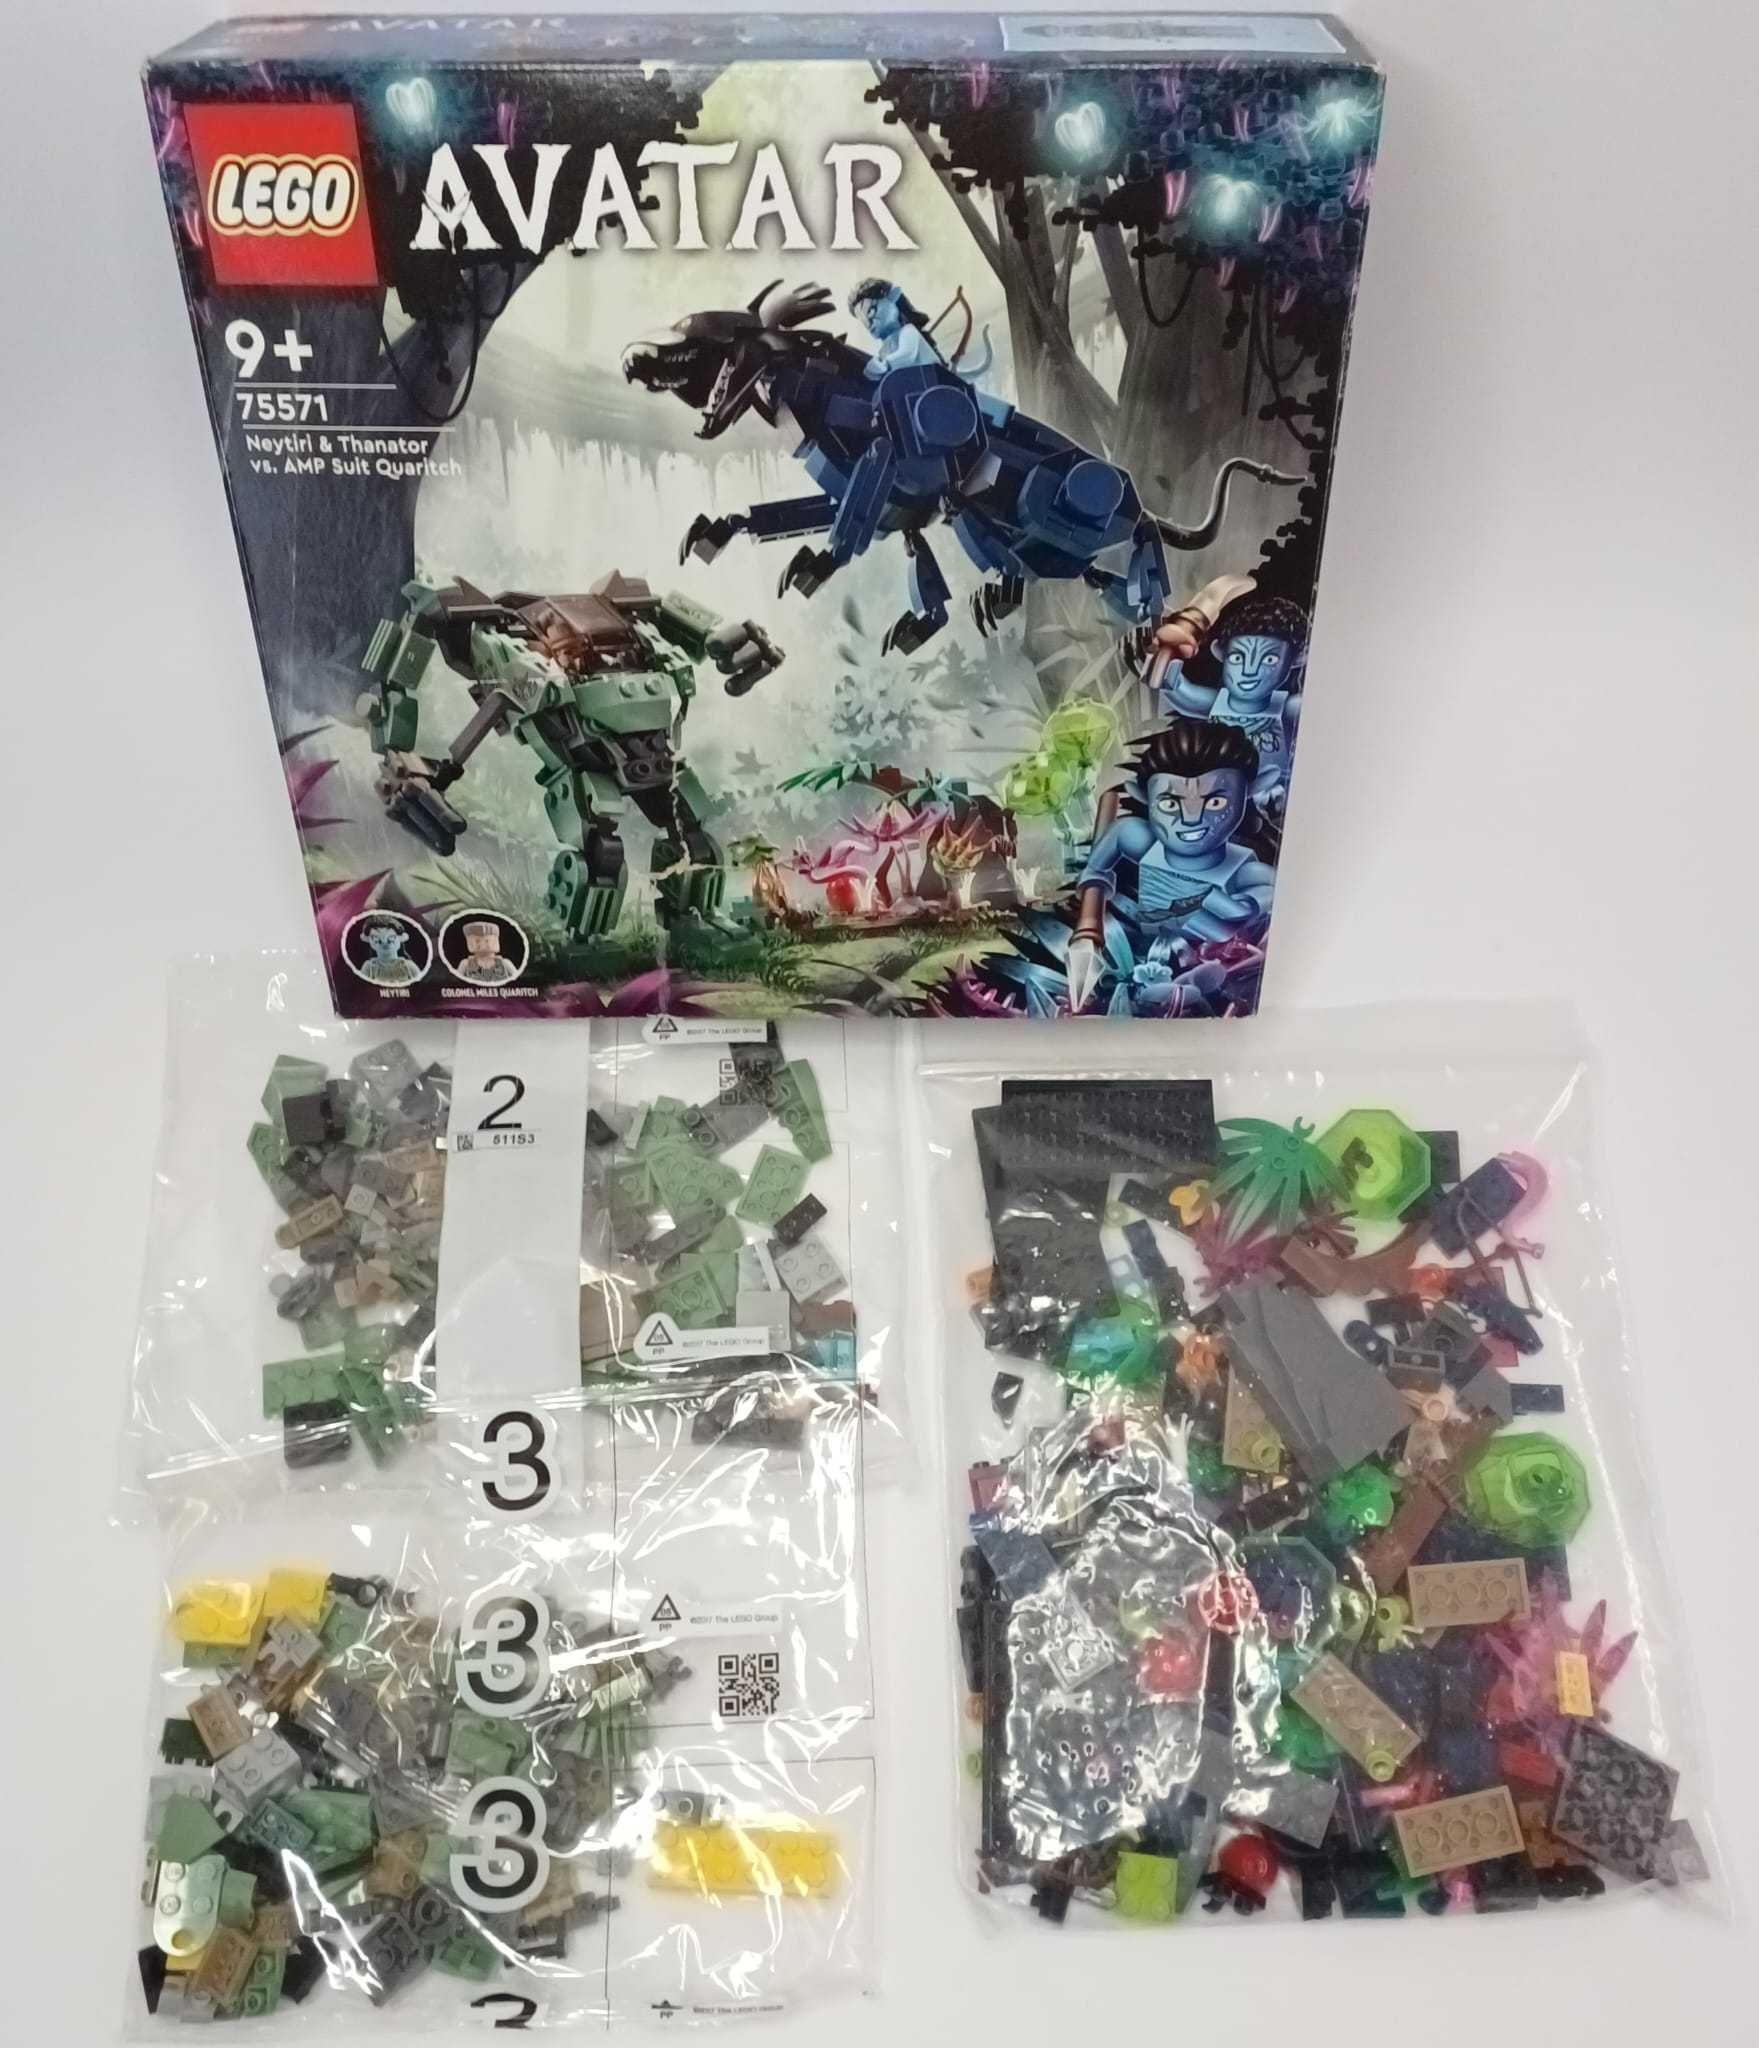 Lego AVATAR 75571